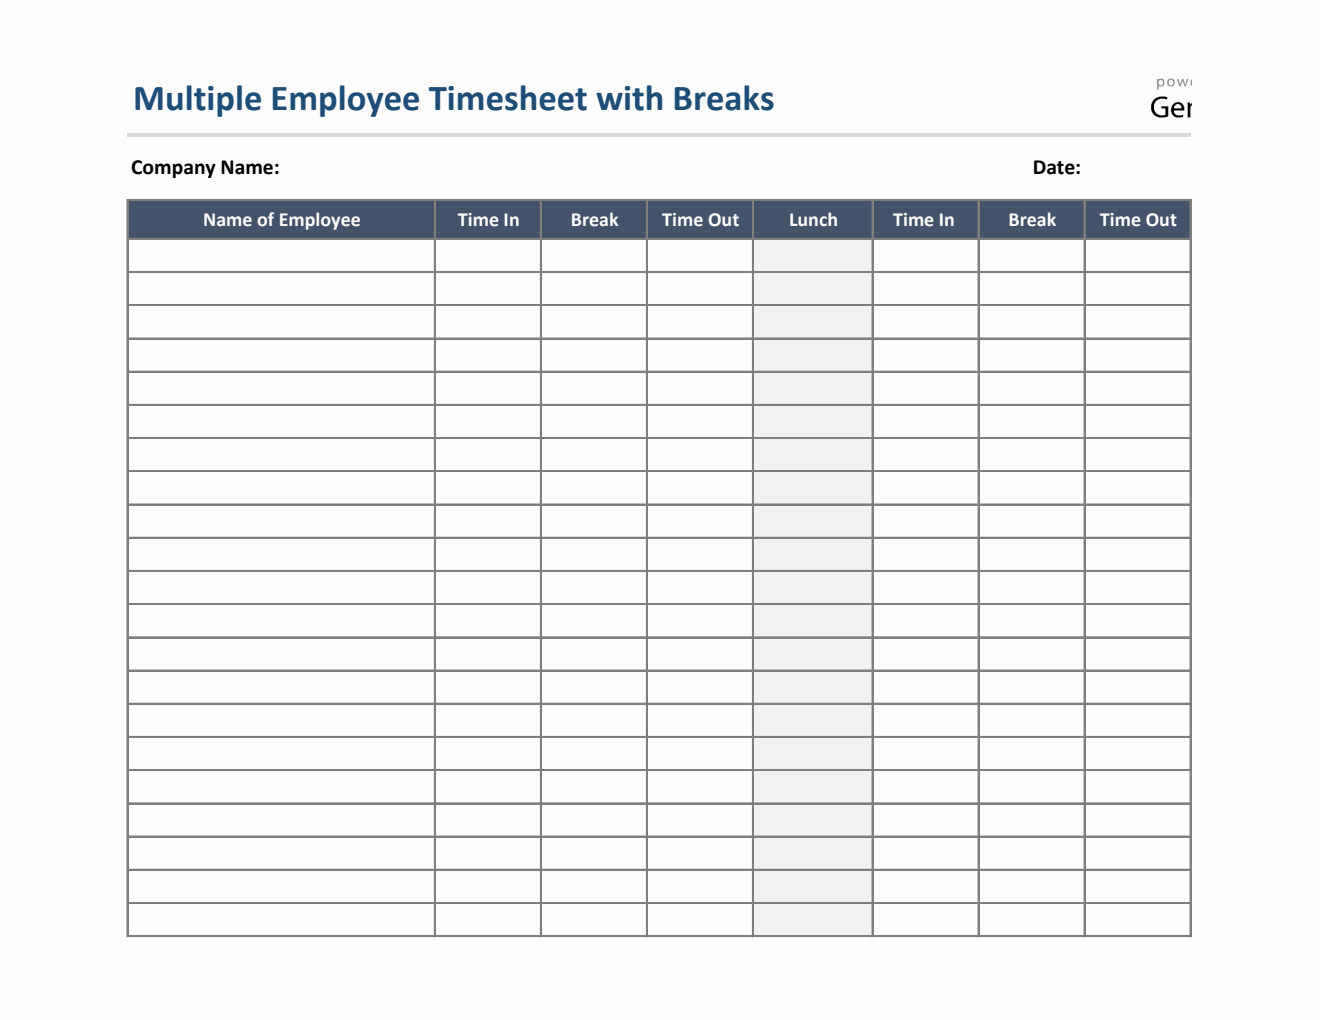 Multiple Employee Timesheet With Breaks in Excel